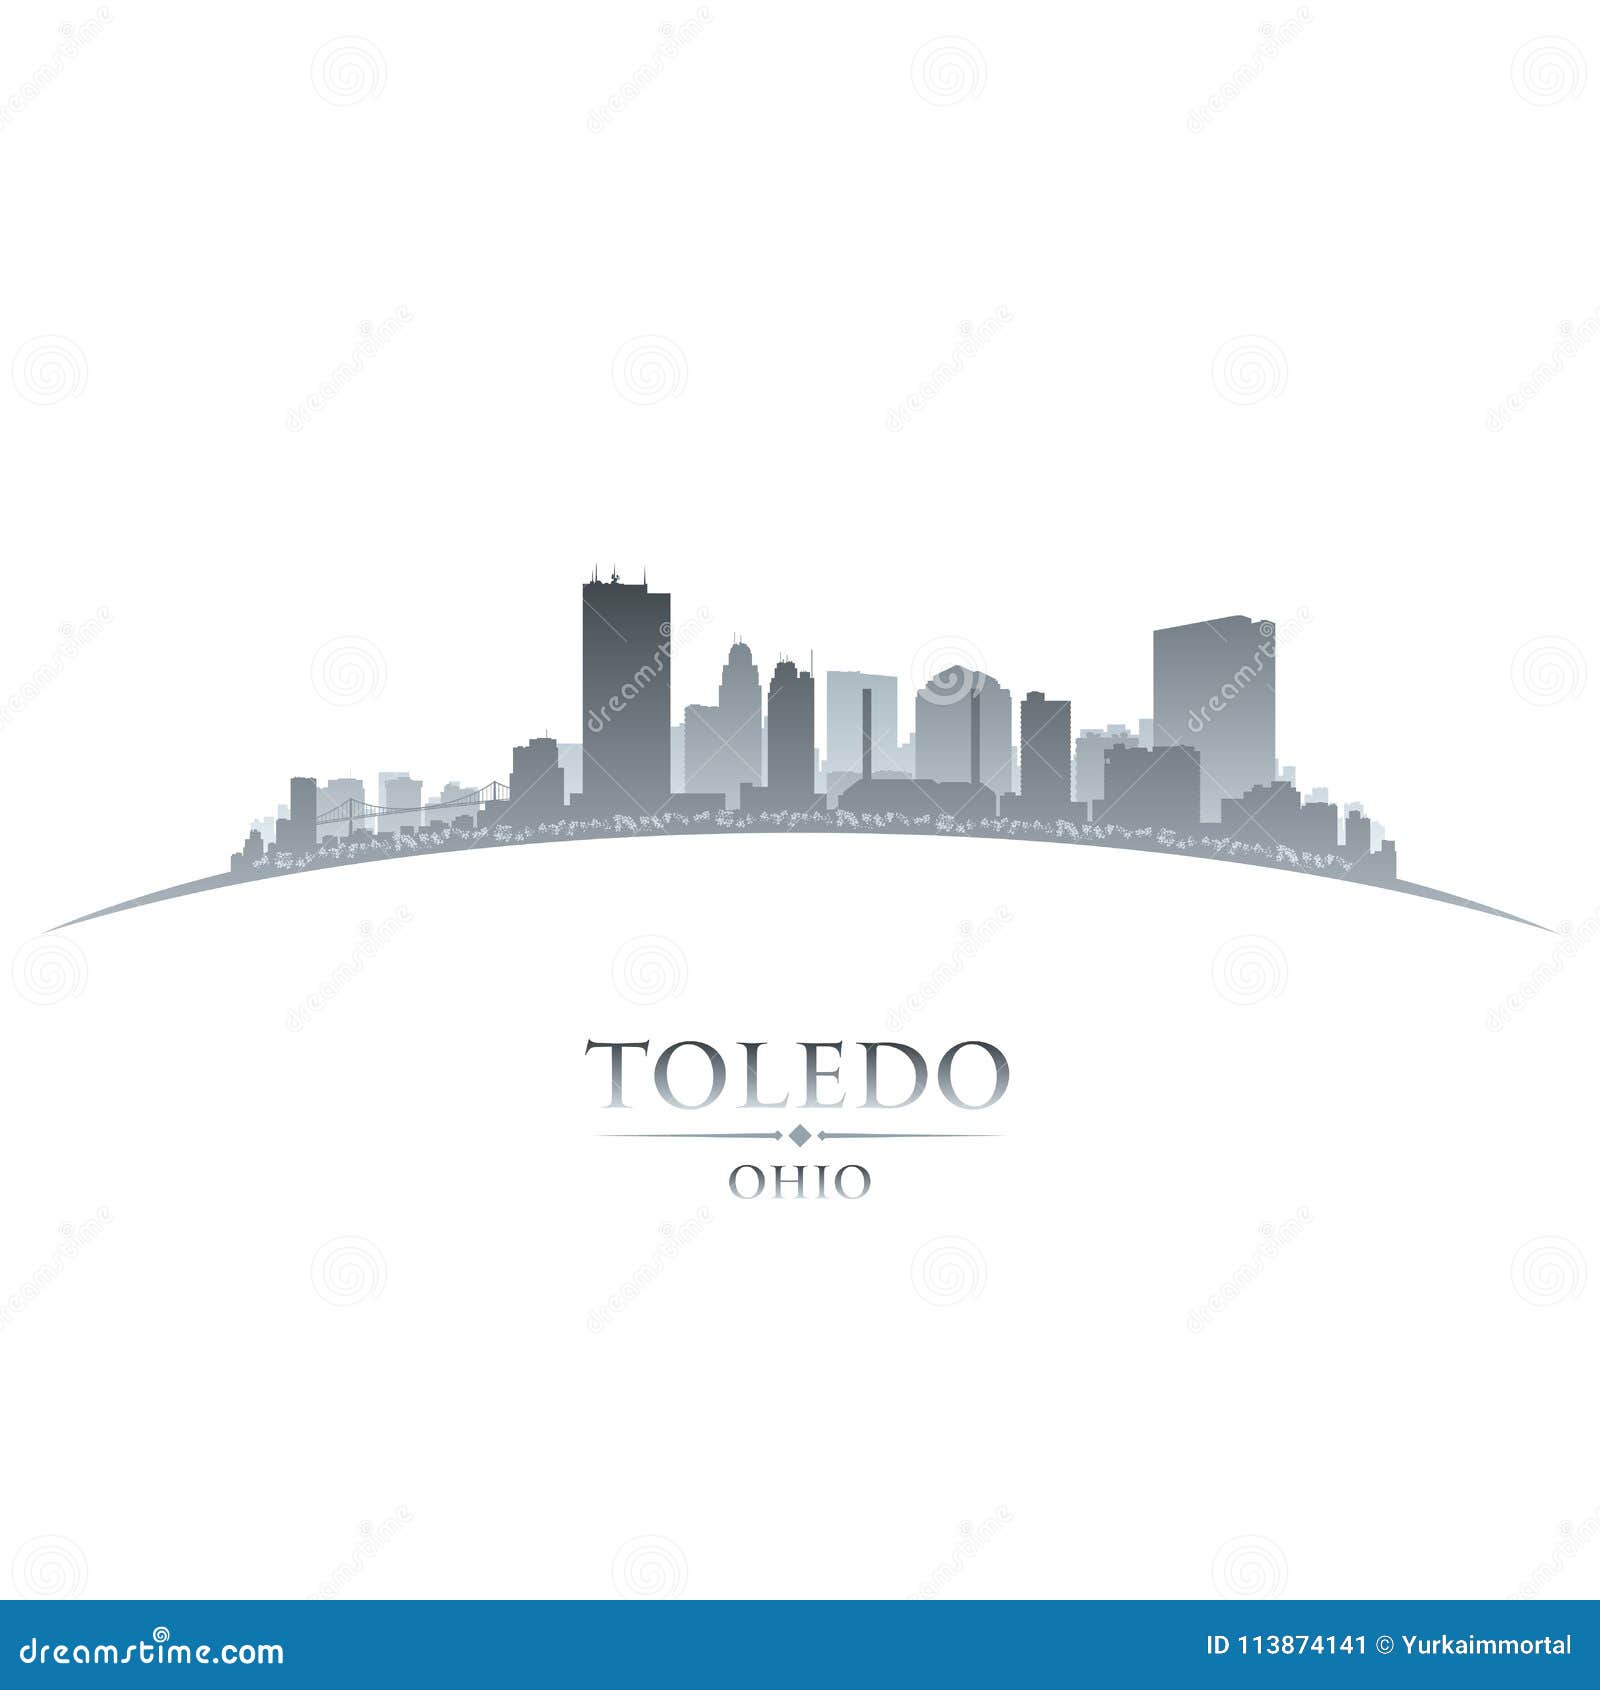 toledo ohio city silhouette white background